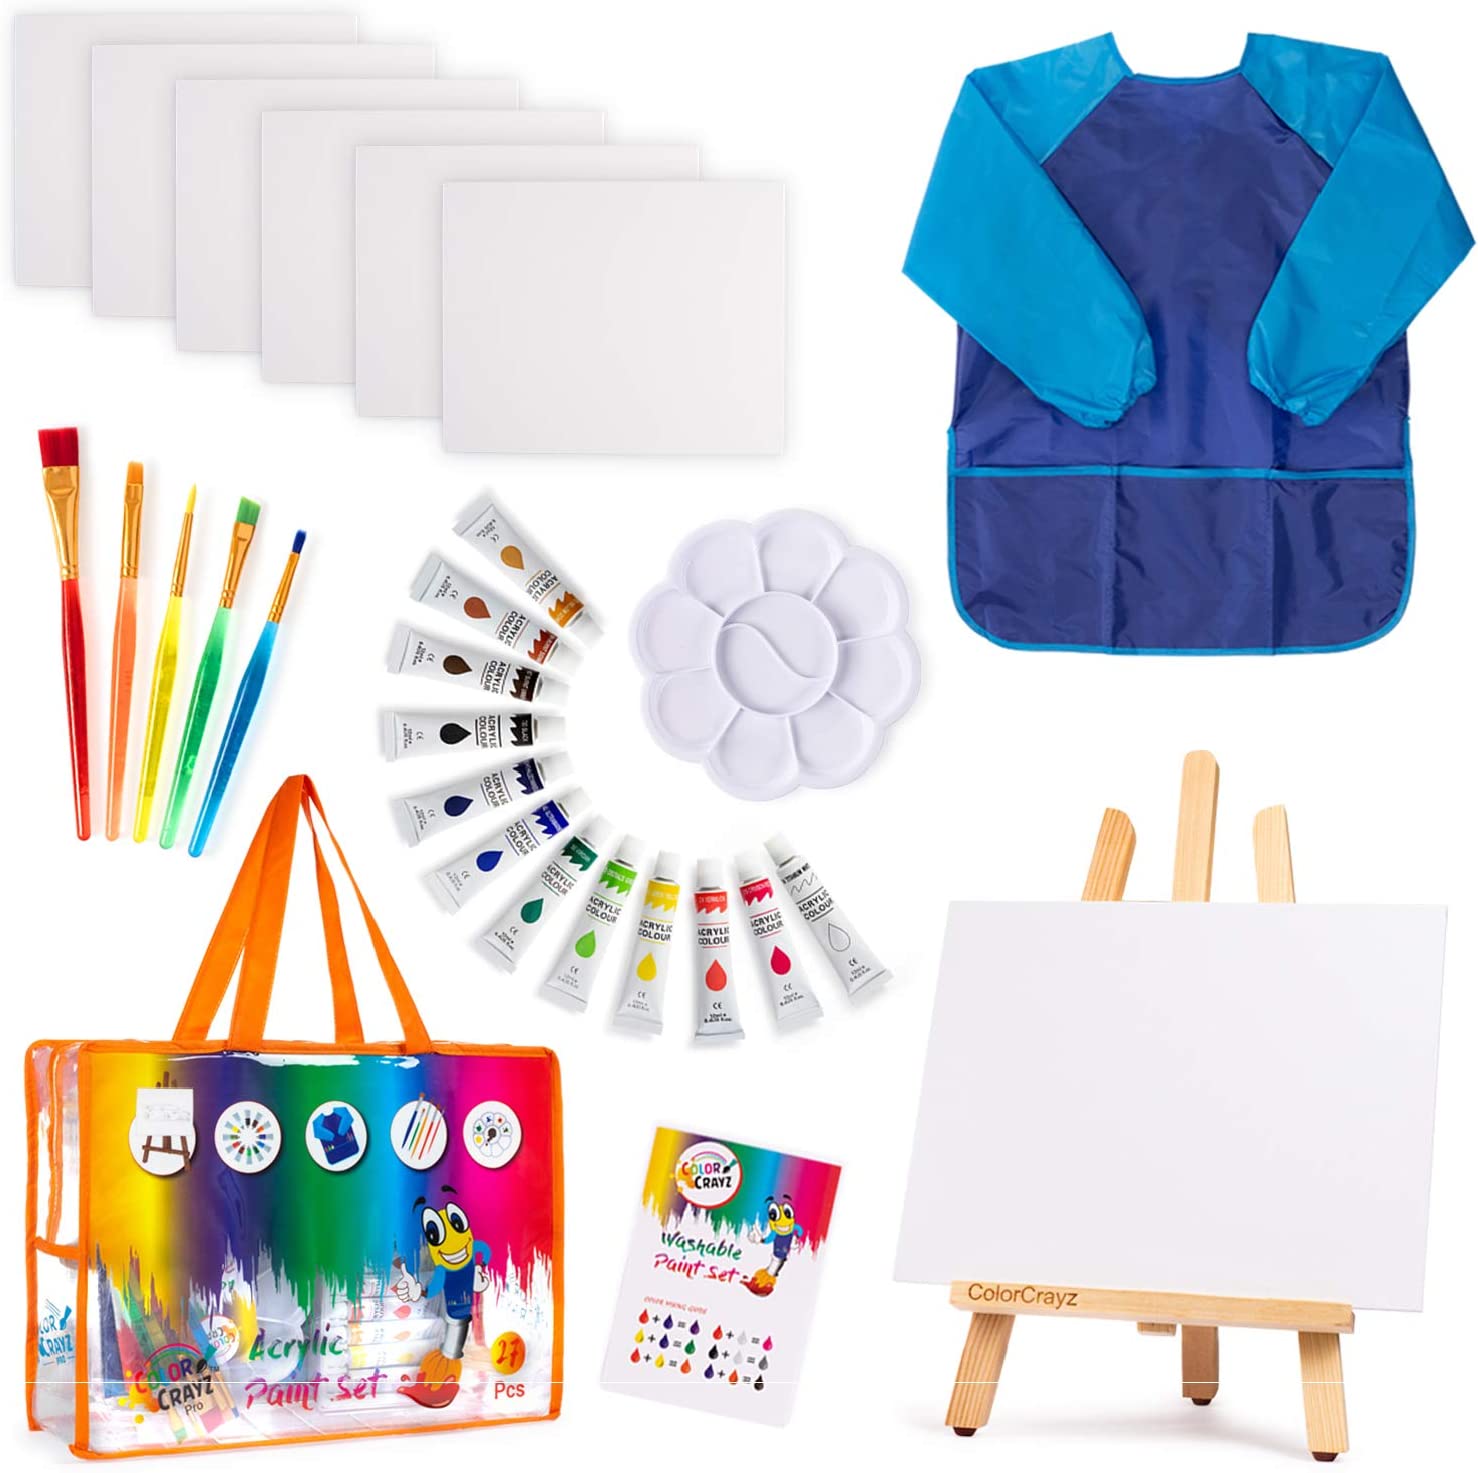 ColorCrayz Complete Painting Art Supplies For Kids, 27-Piece